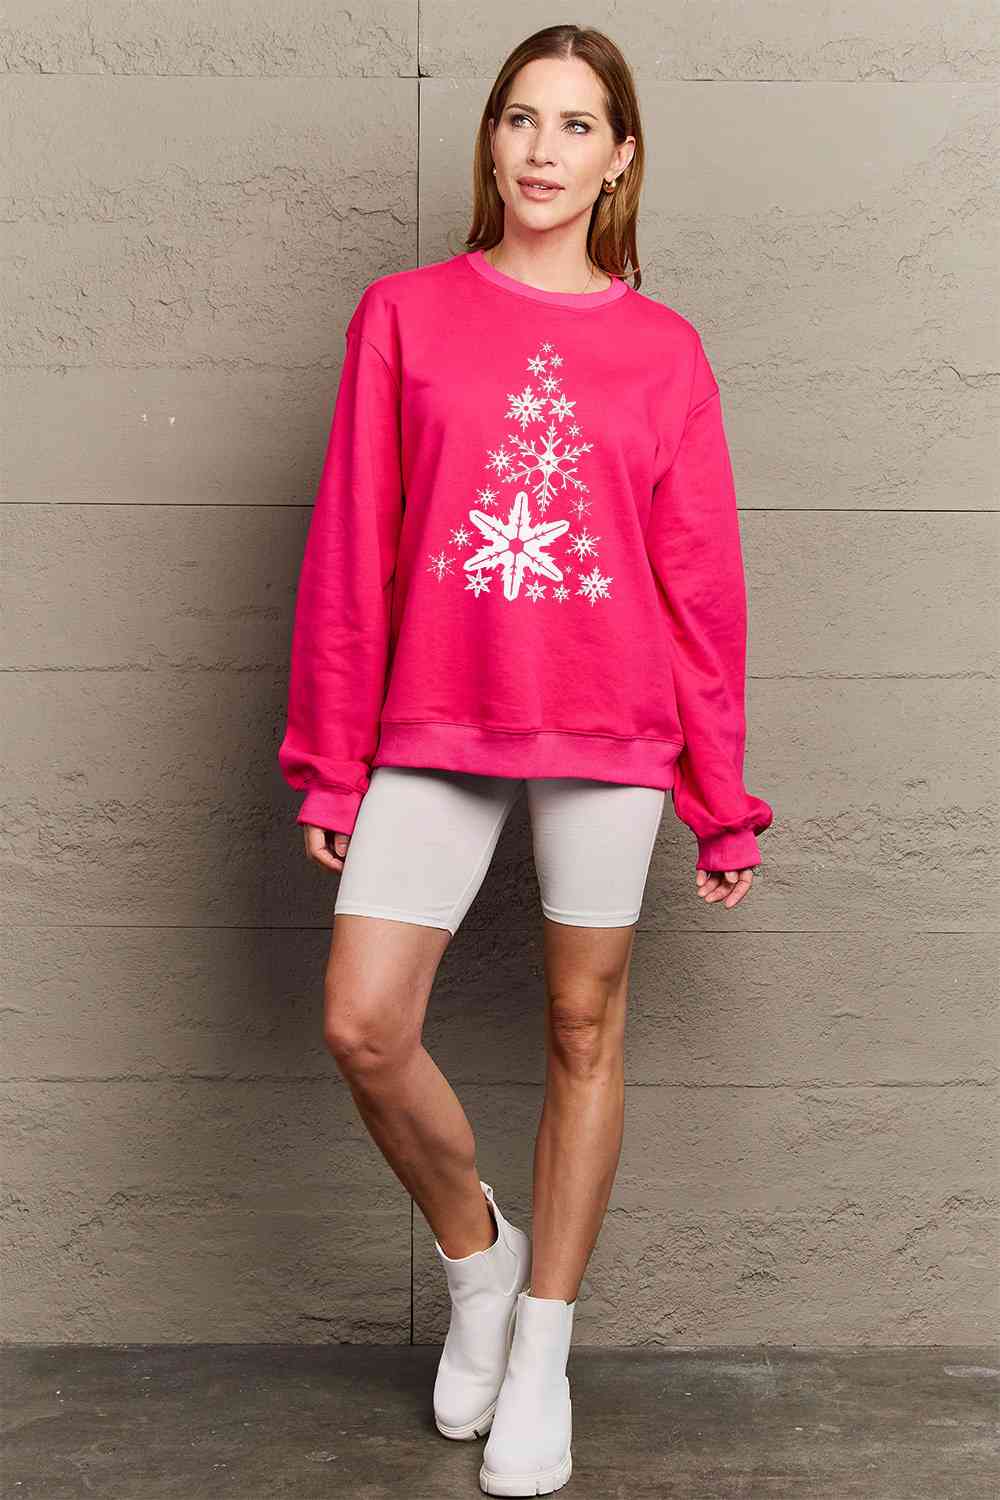 Simply Love Full Size Snowflake Christmas Tree Graphic Sweatshirt